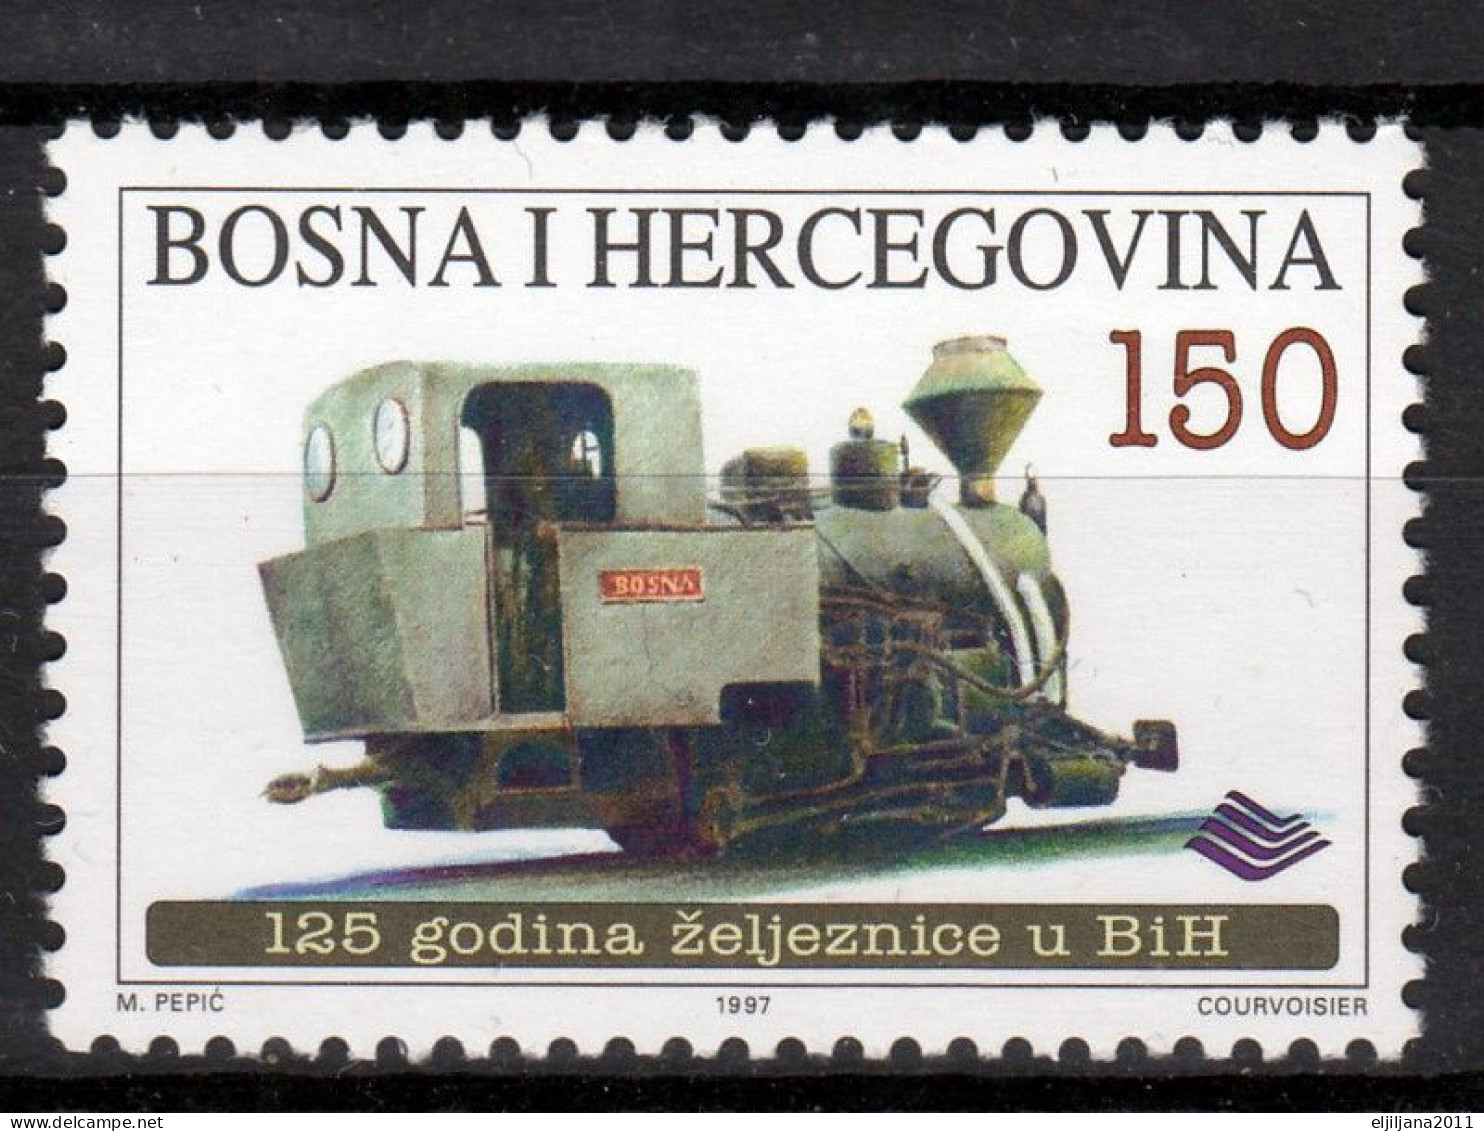 BOSNA I HERCEGOVINA 1997 Bosnia And Hercegovina ⁕ 125 Years Of Railways In BiH Mi. 97 ⁕ 4 + 1v MNH - Bosnie-Herzegovine